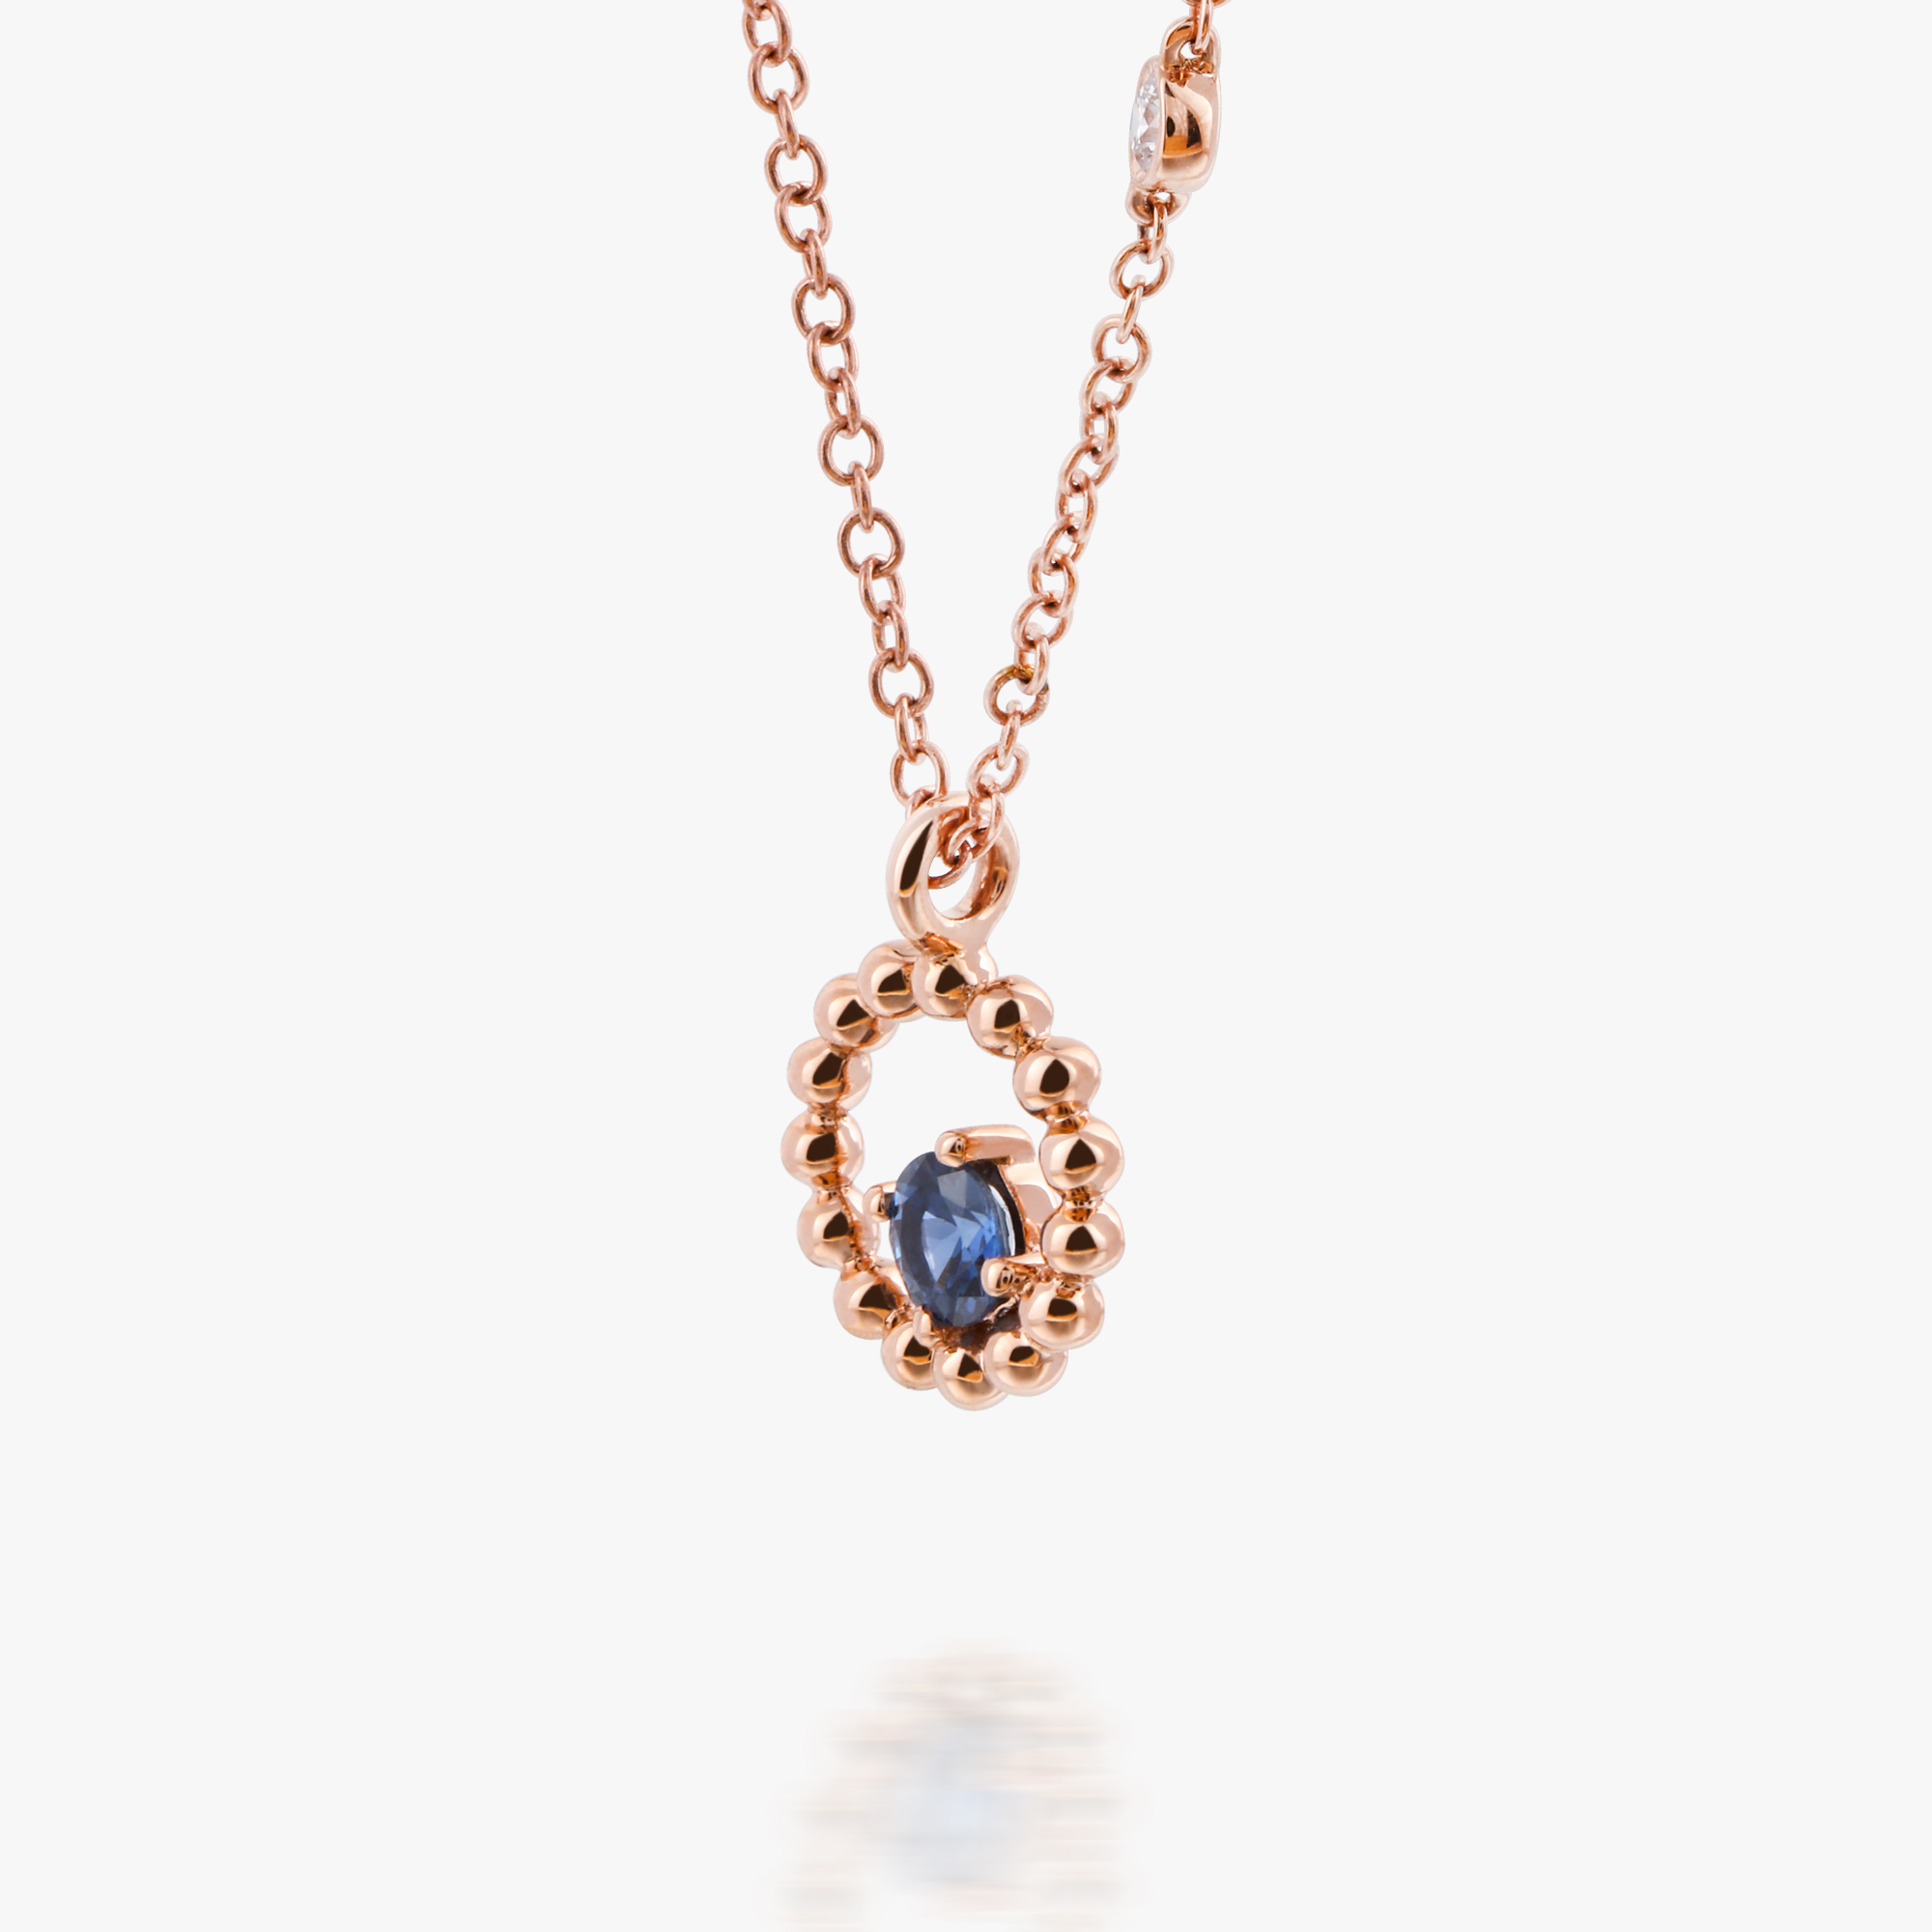 ACCA 18KR Necklace wirh Round Sapphire and Diamond